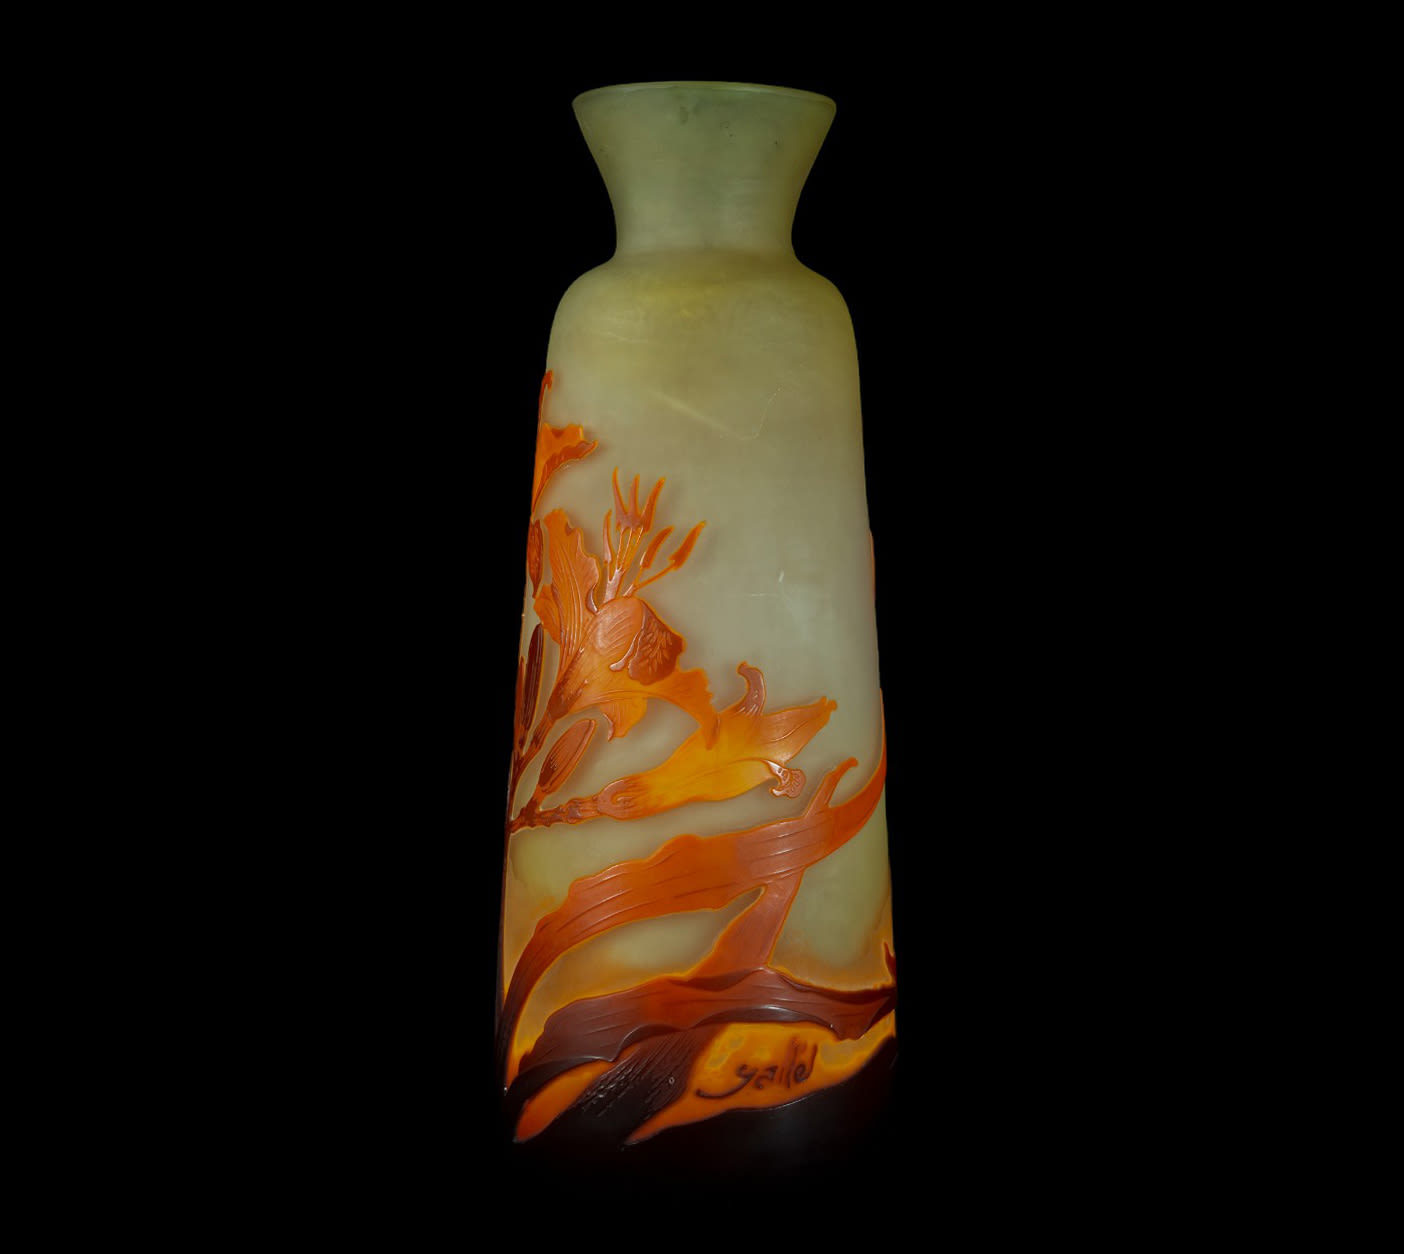 Large Art Nouveau Gallé vase in blown glass and polychrome vitreous paste, 1900s - 1920s - Image 4 of 6